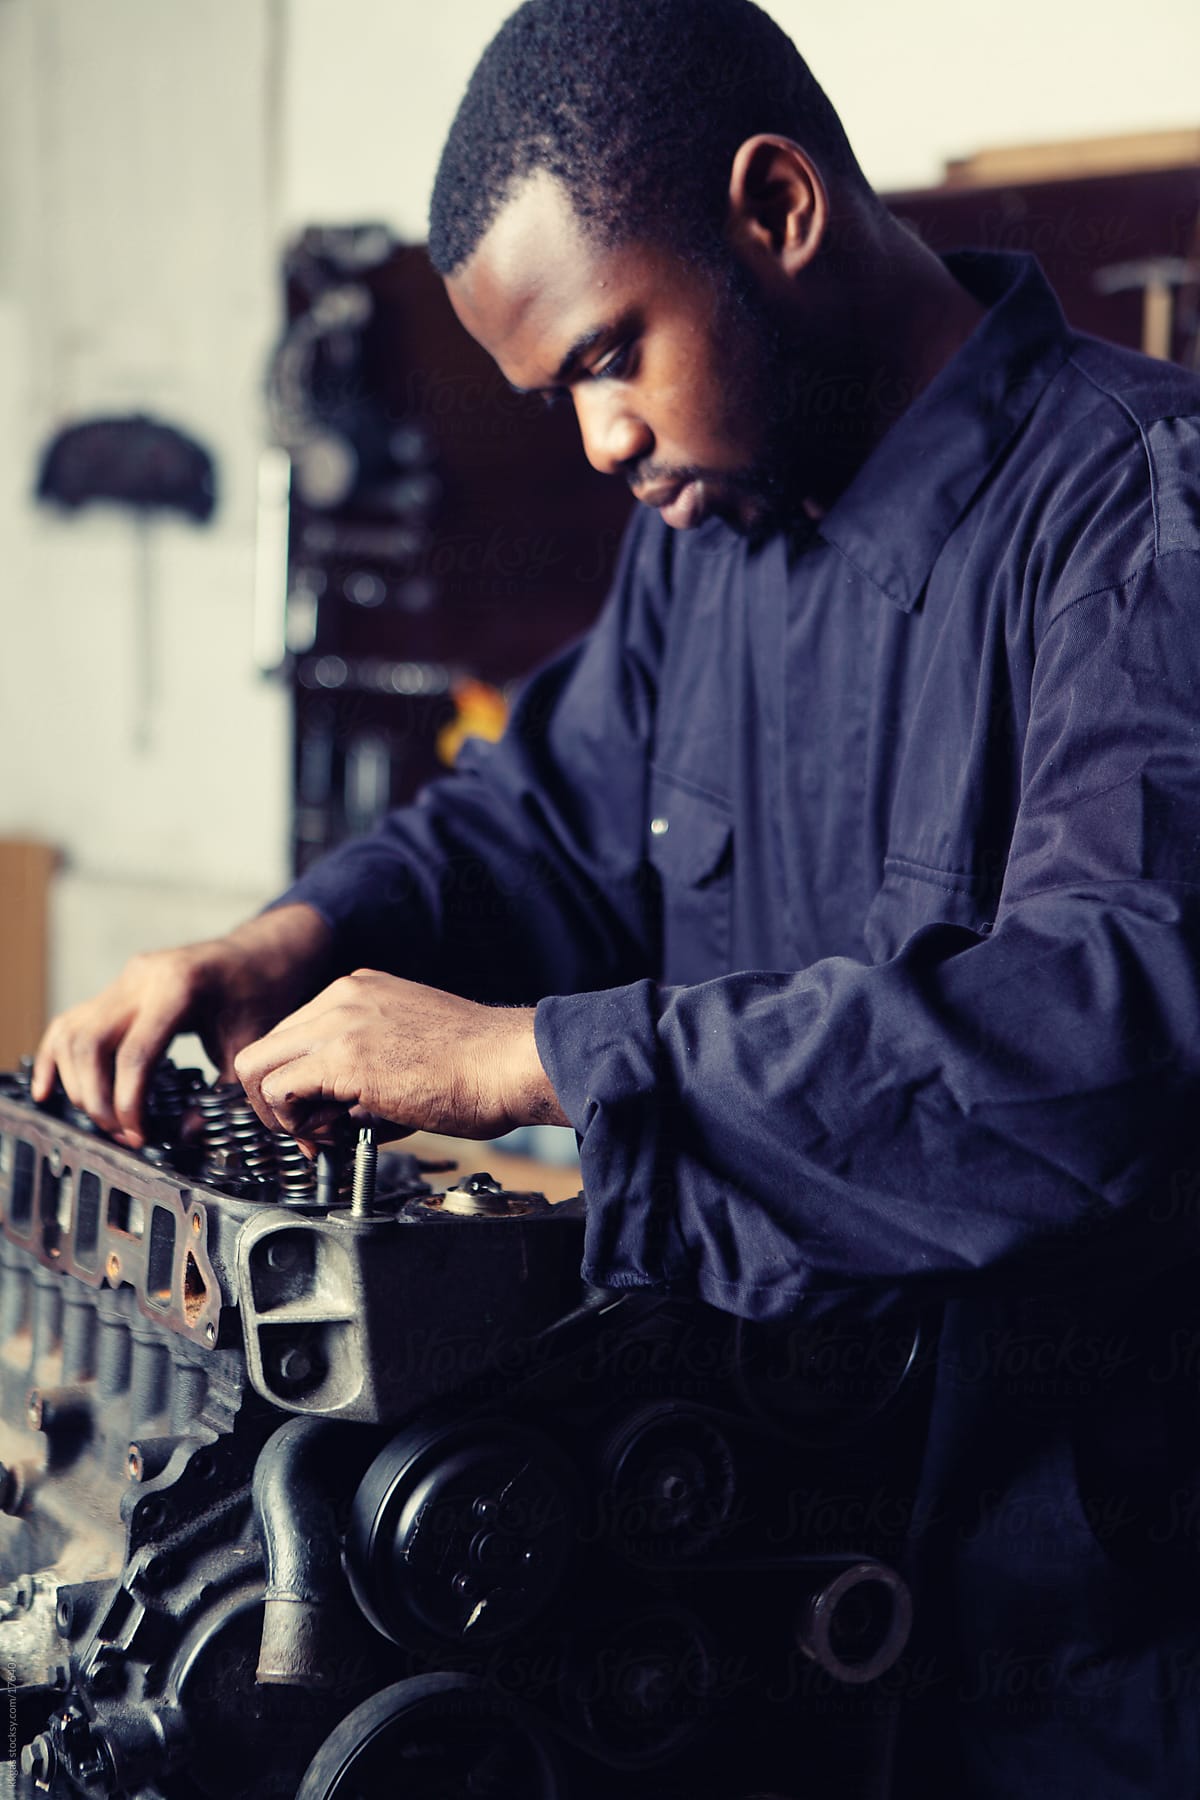 Young mechanic working on engine